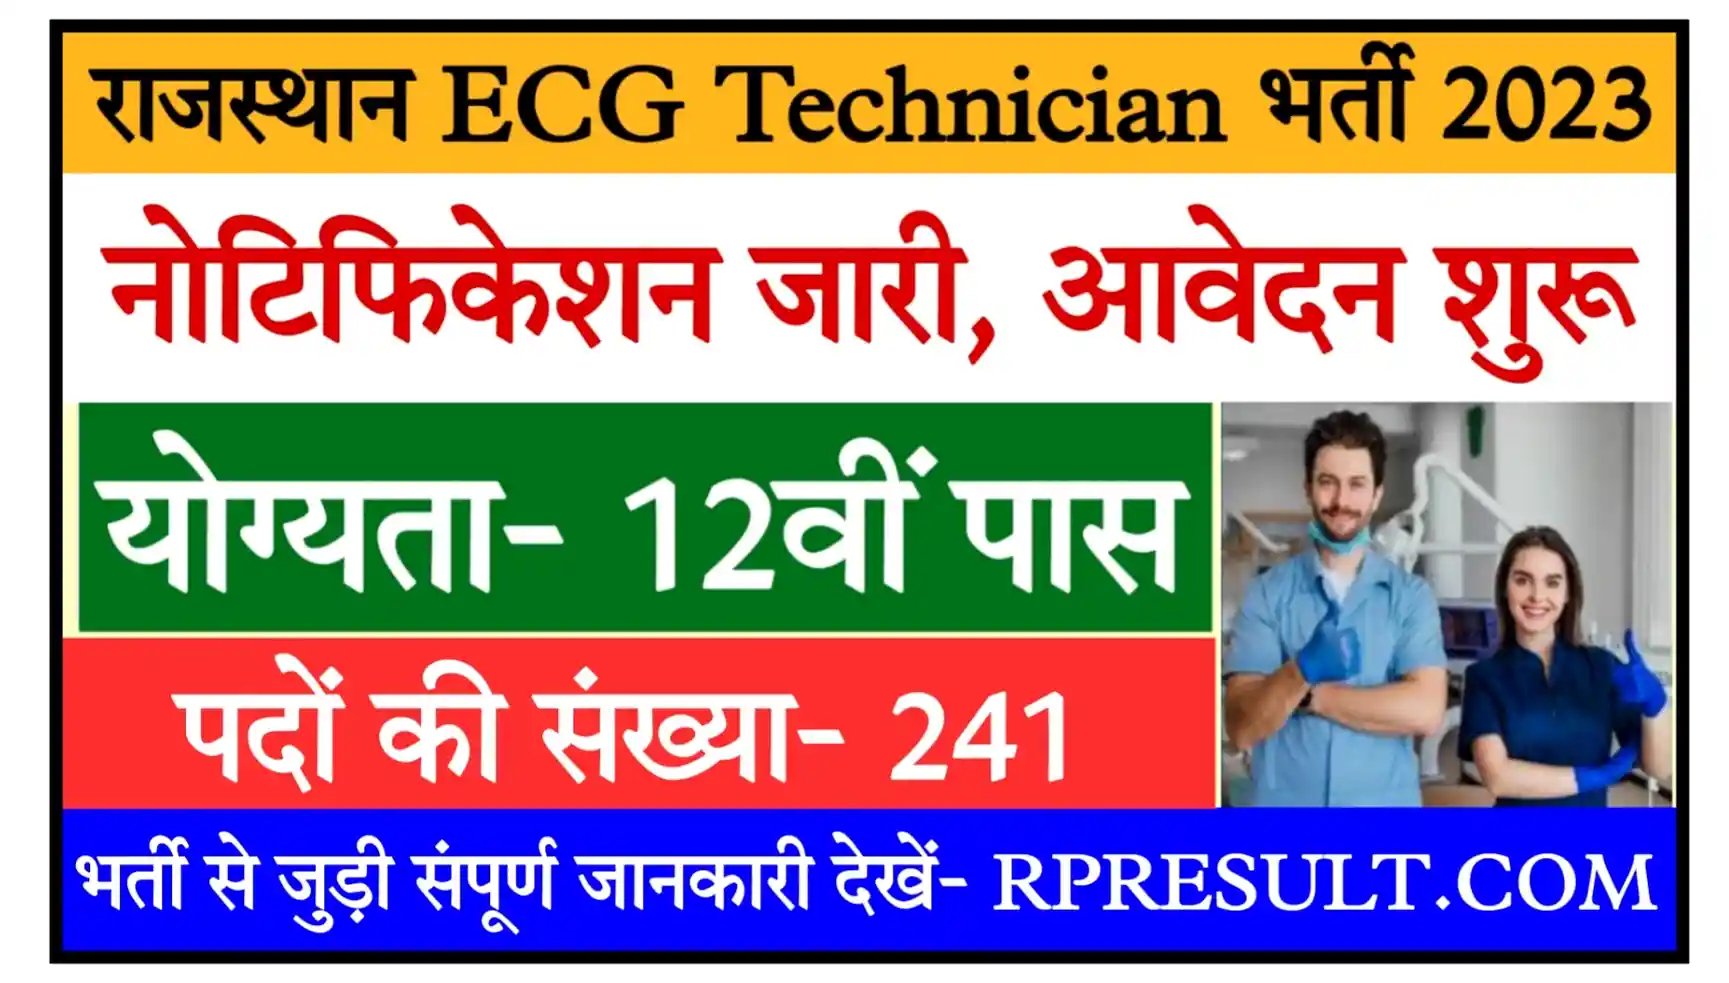 Rajasthan ECG Technician Recruitment 2023 Notification, Apply Online Check All Details